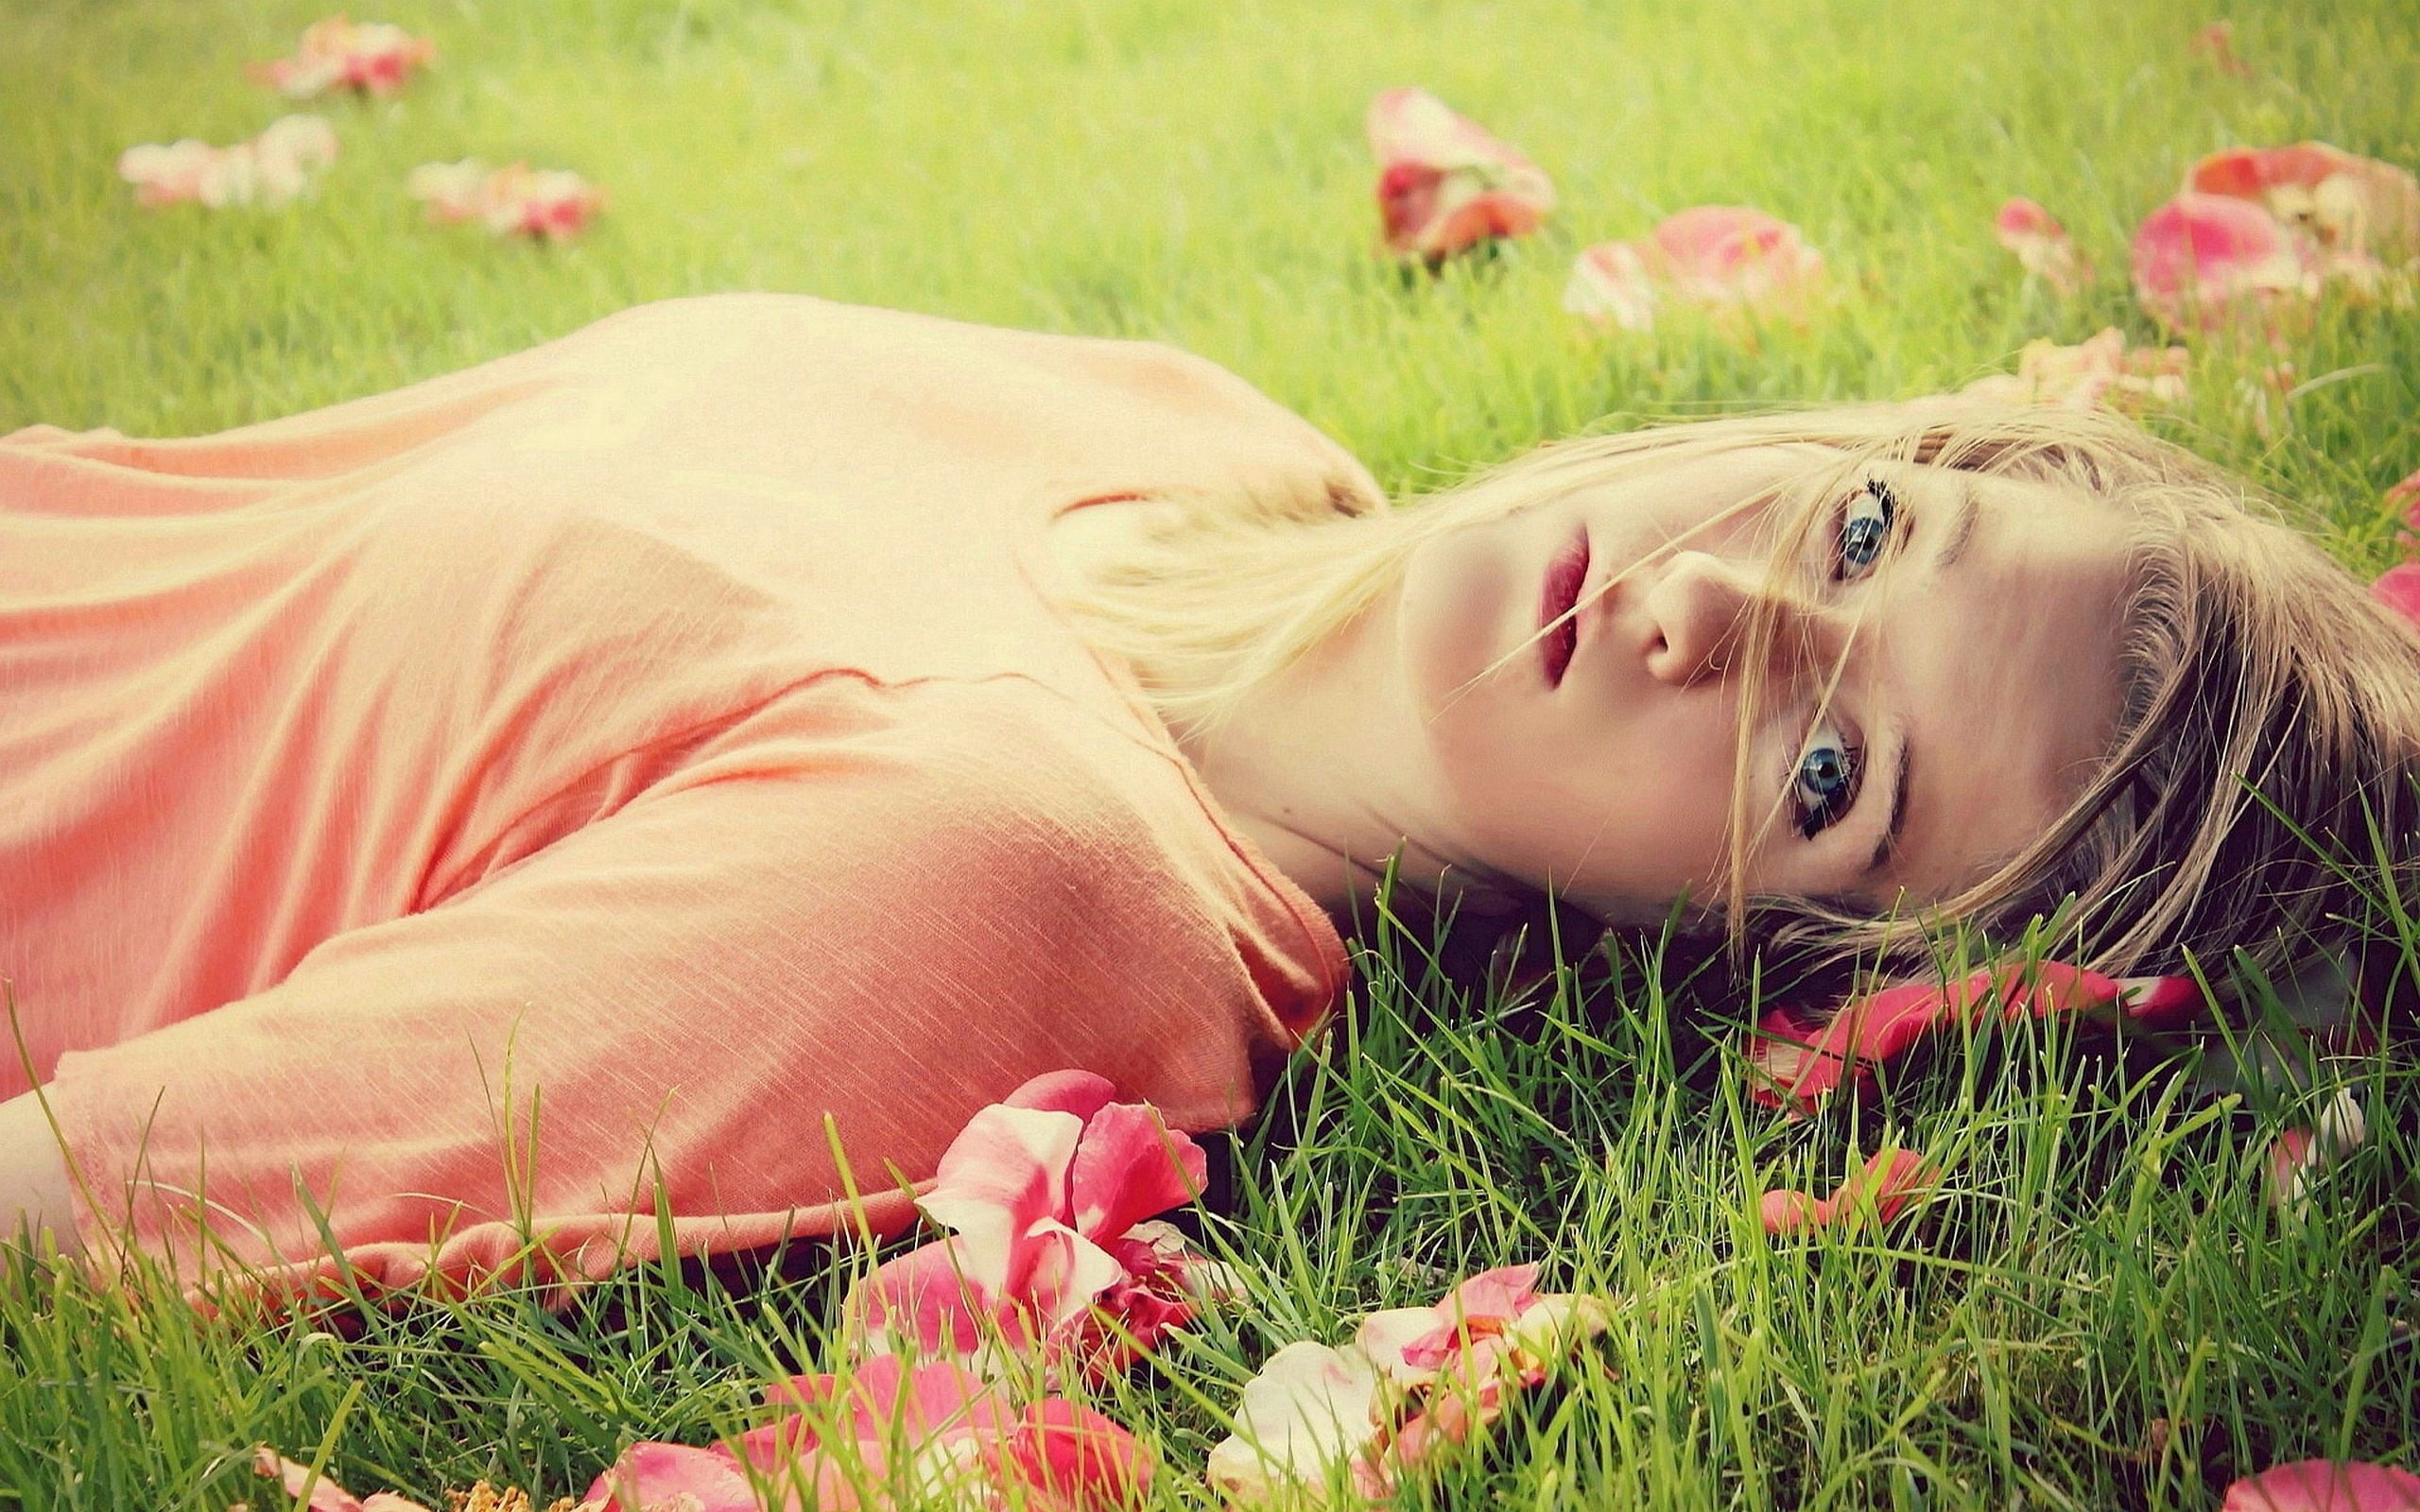 women's pink scoop-neck top, grass, flowers, girl, lying, hair